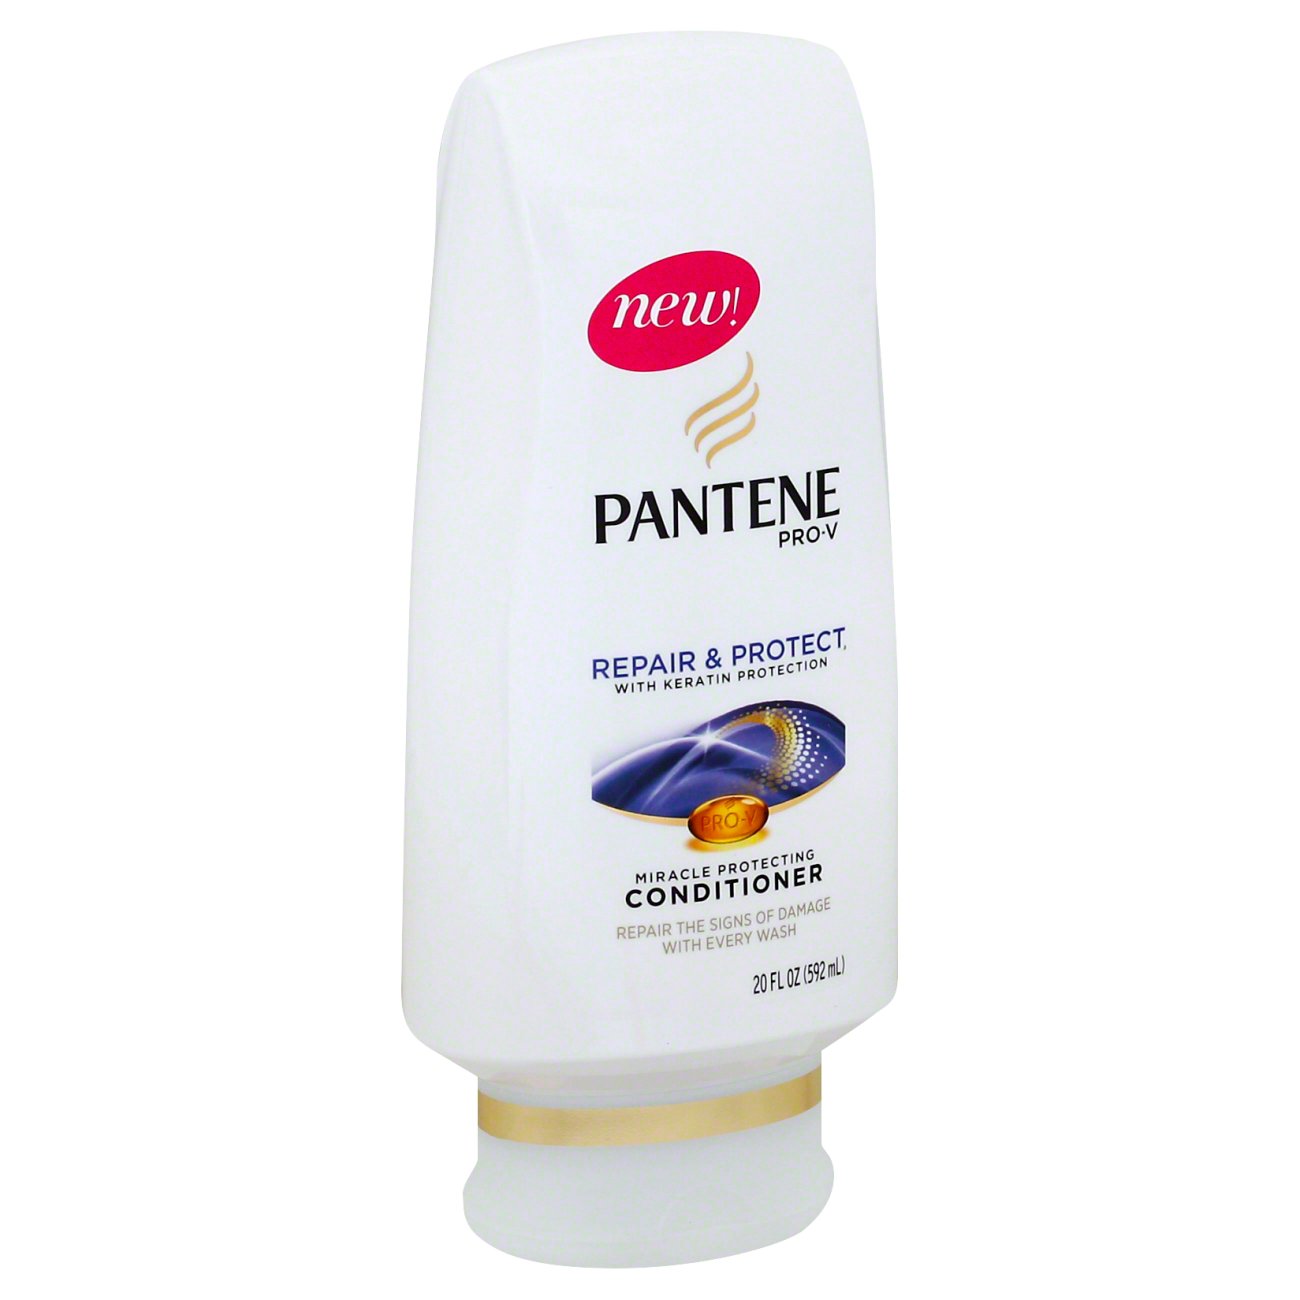 Pantene Pro V Repair Protect Conditioner Shop Shampoo Conditioner At H E B